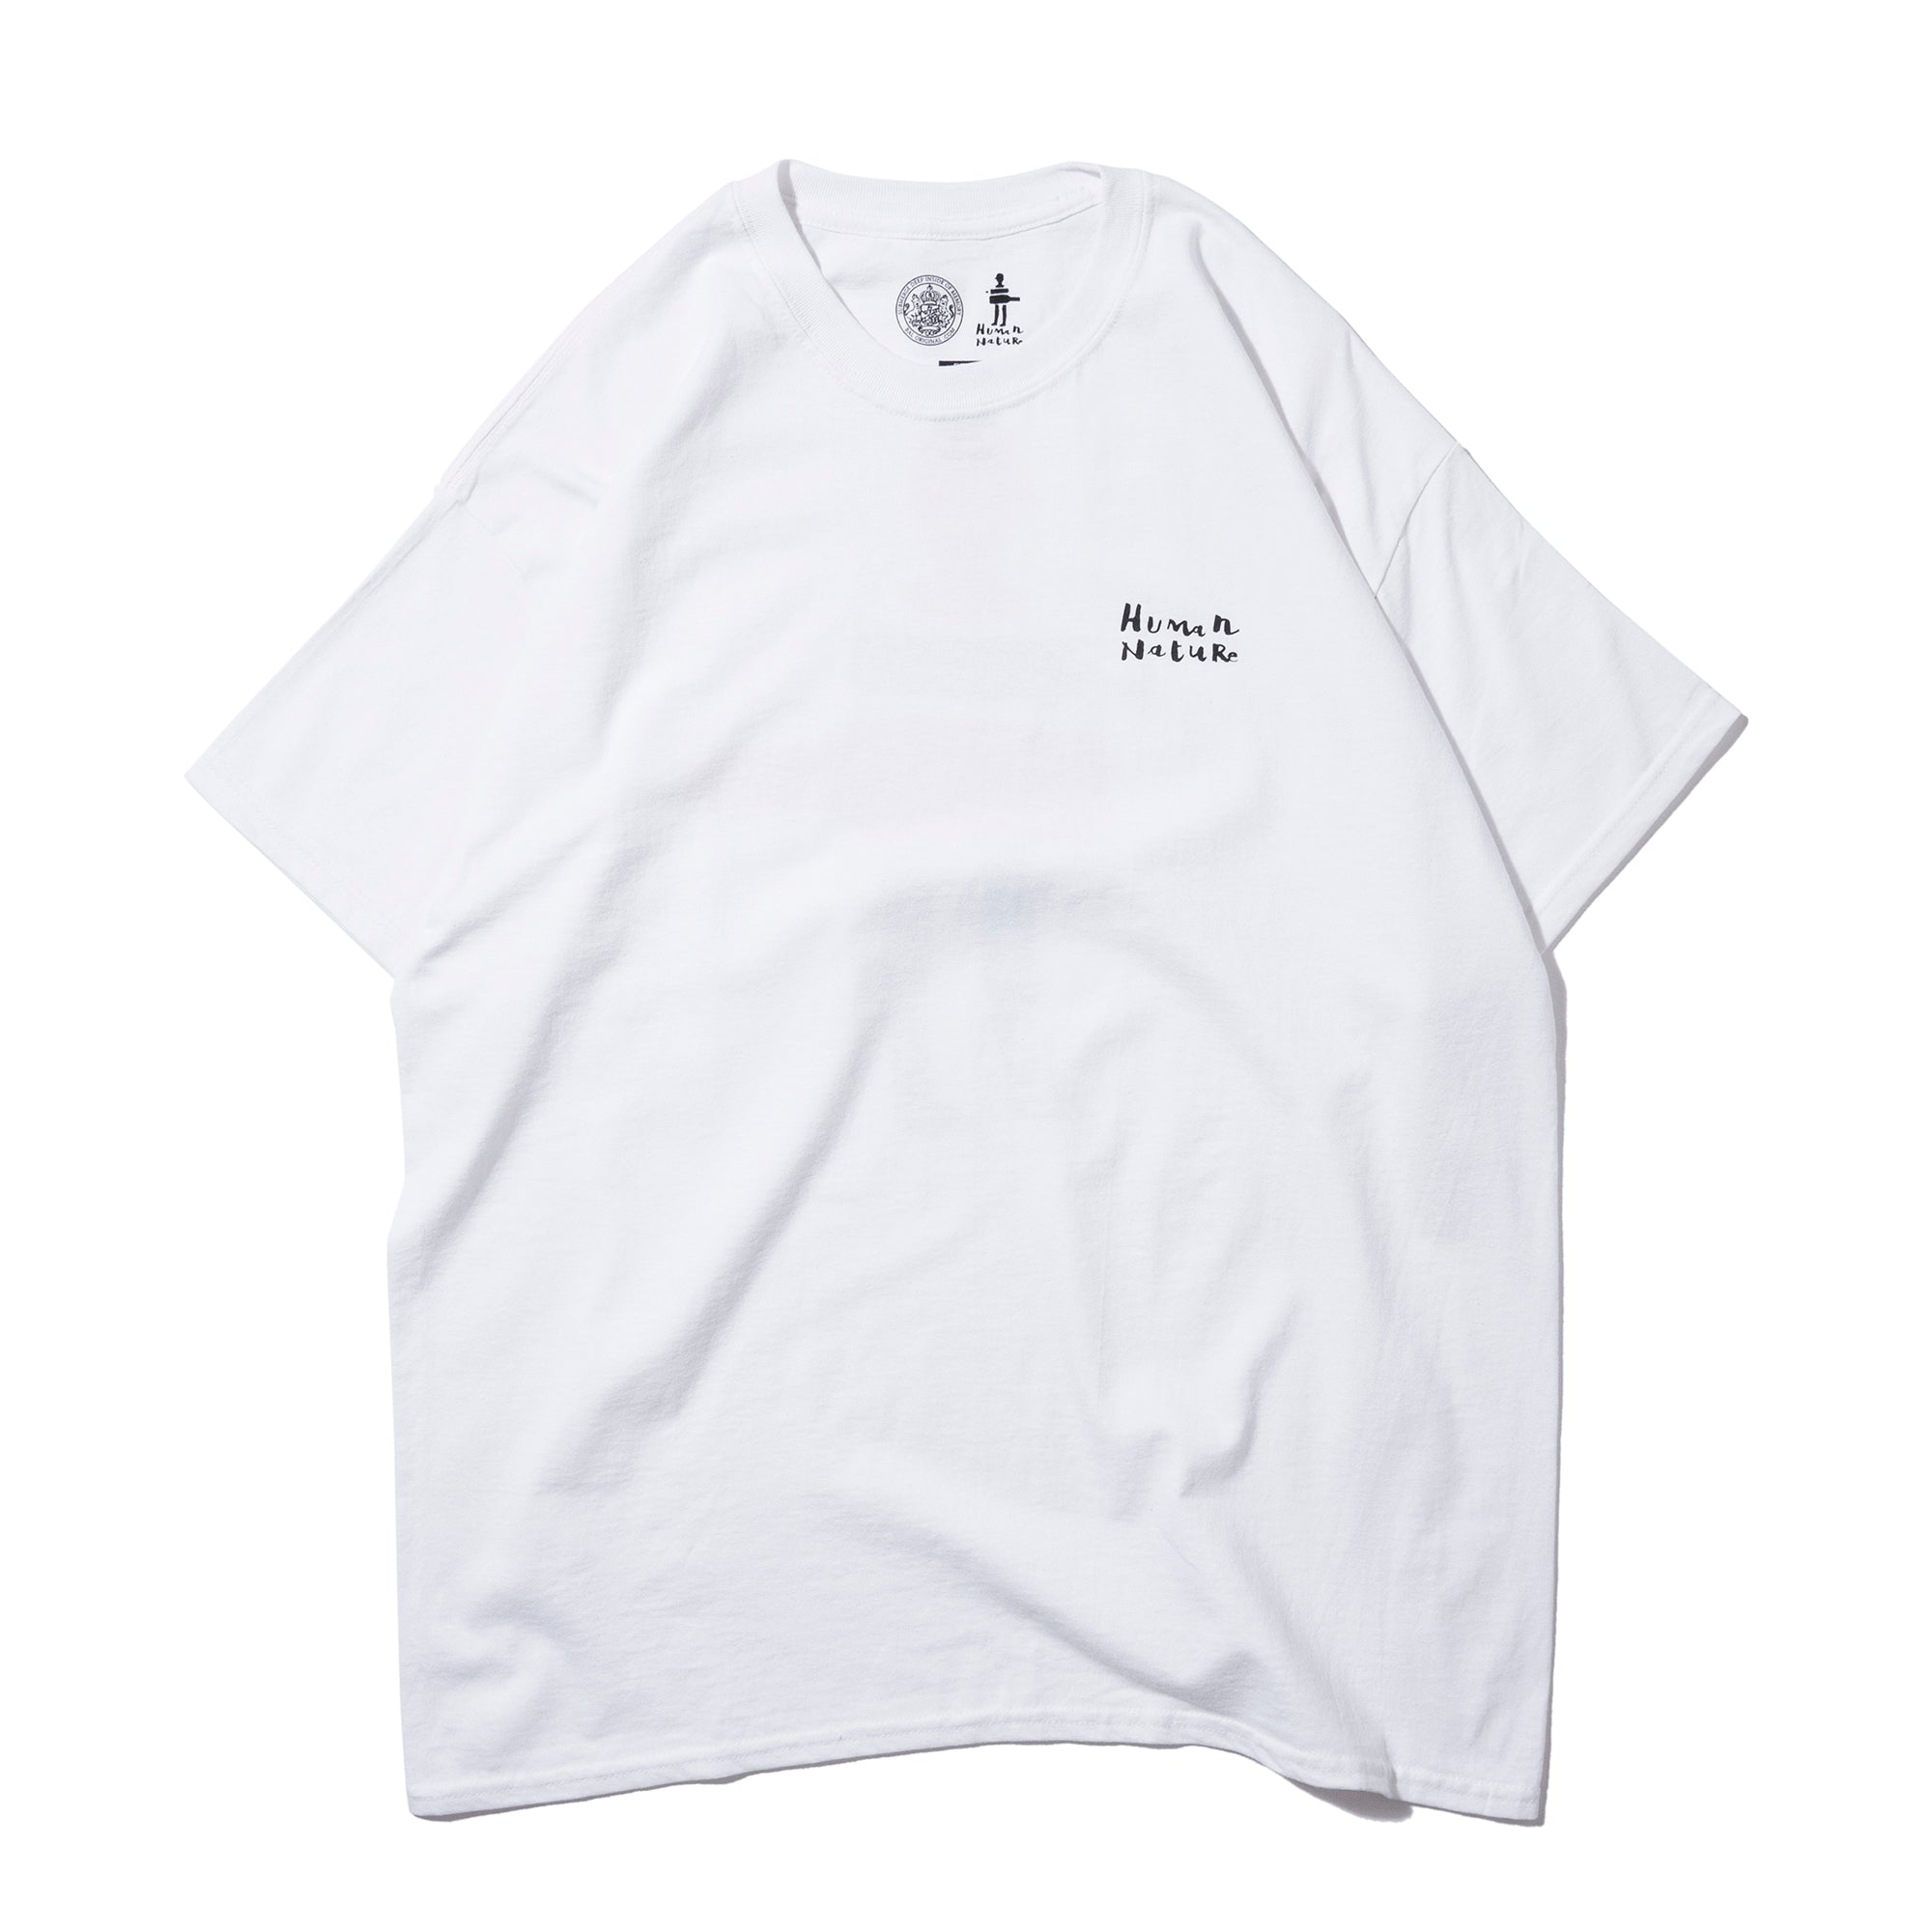 Human Nature T-shirt (White)